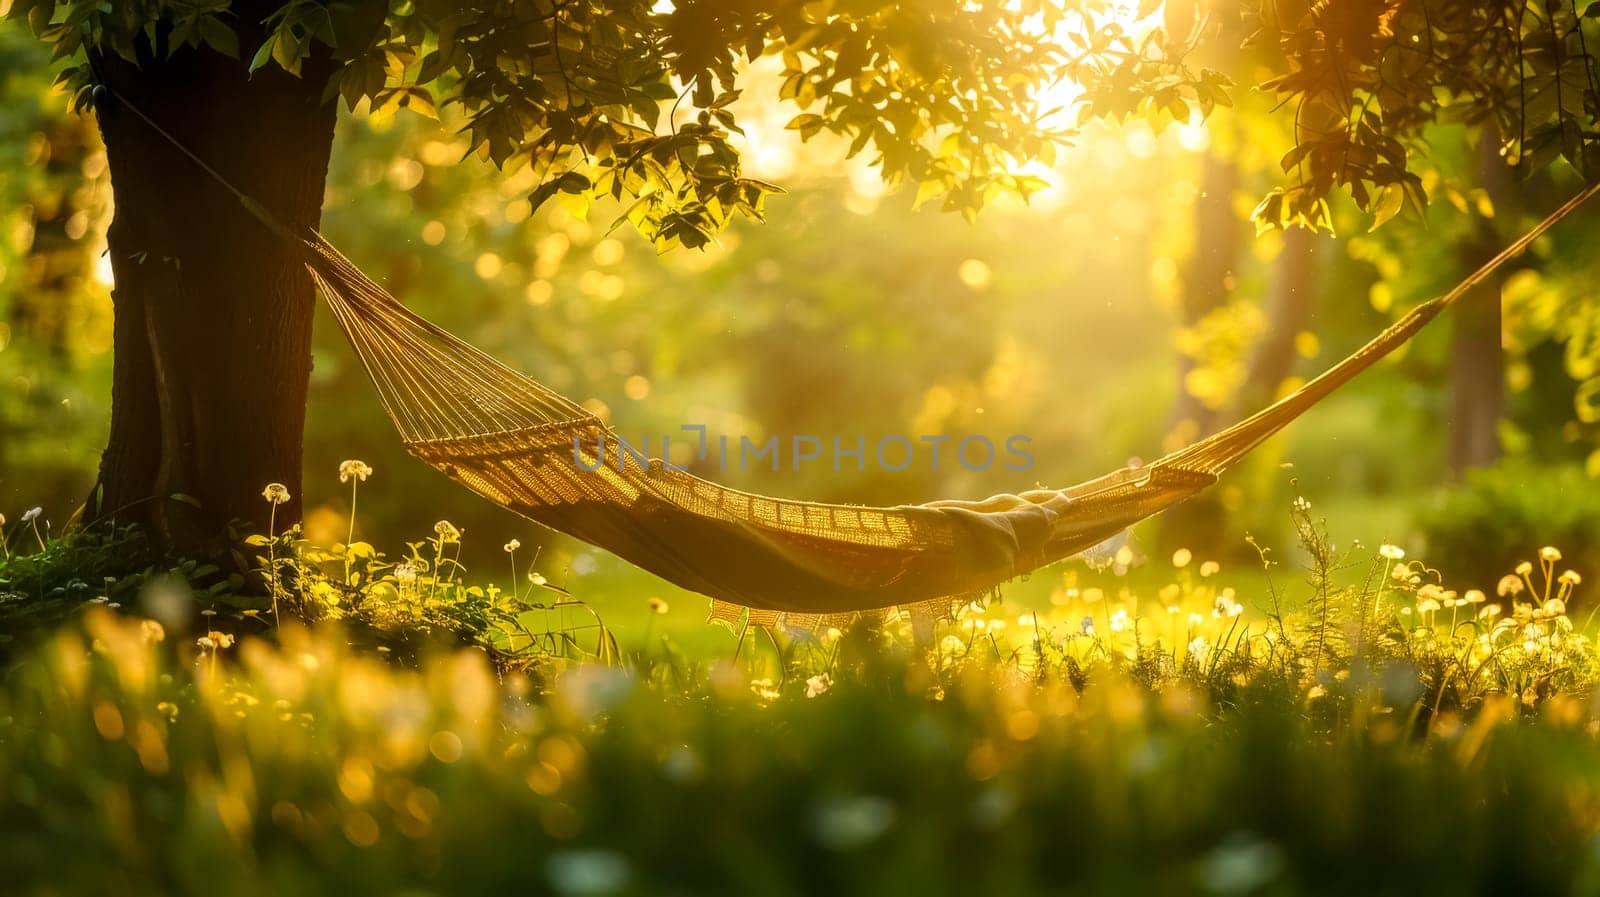 Serene summer hammock at sunset by Edophoto